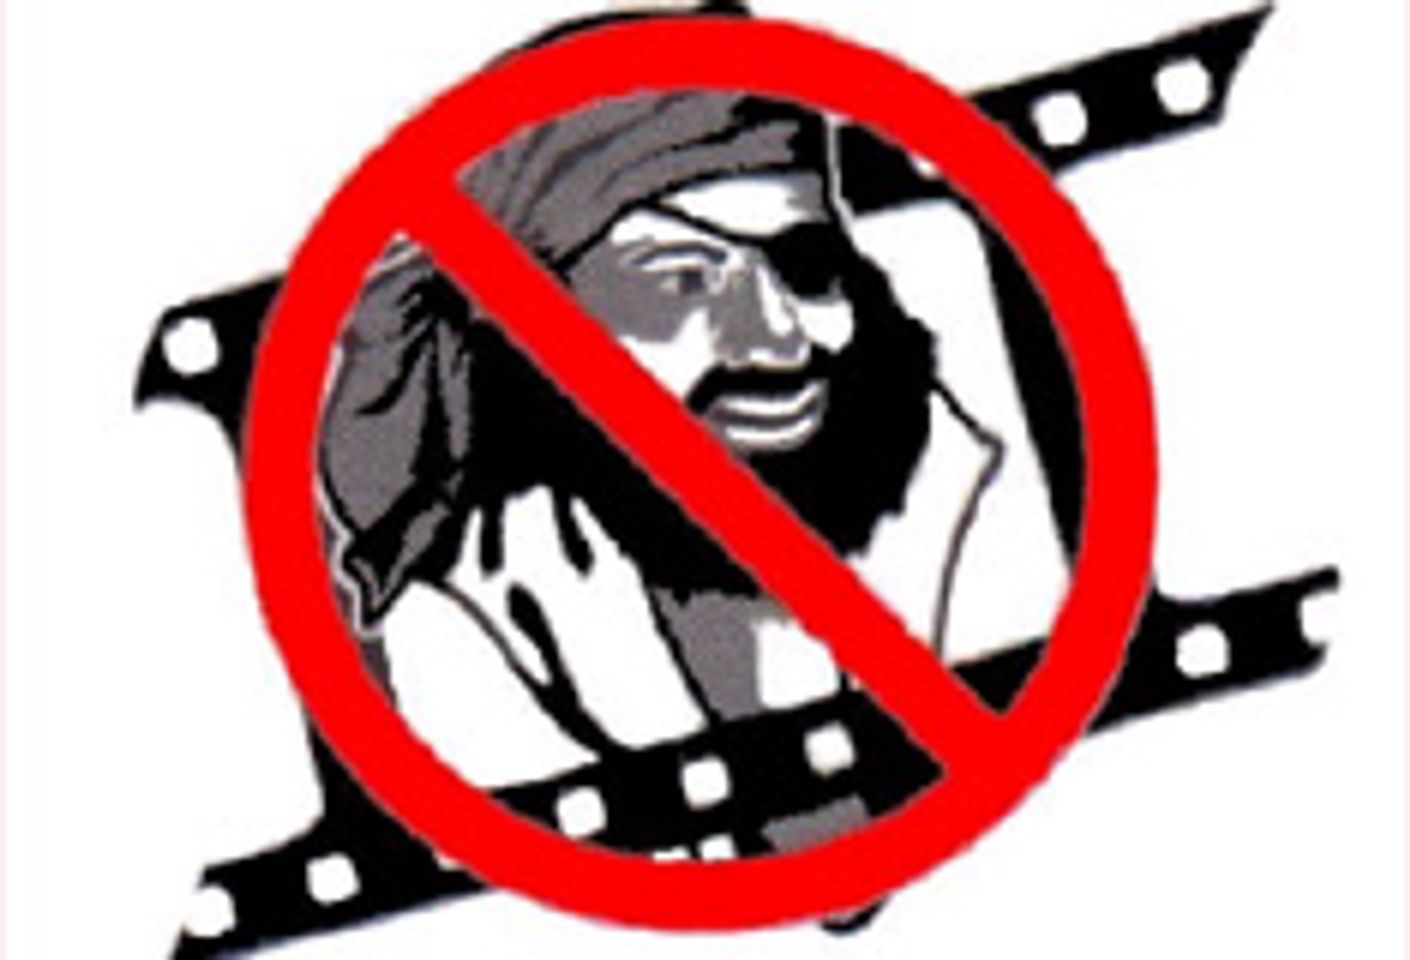 Senate Passes Bill to Jail Film Pirates